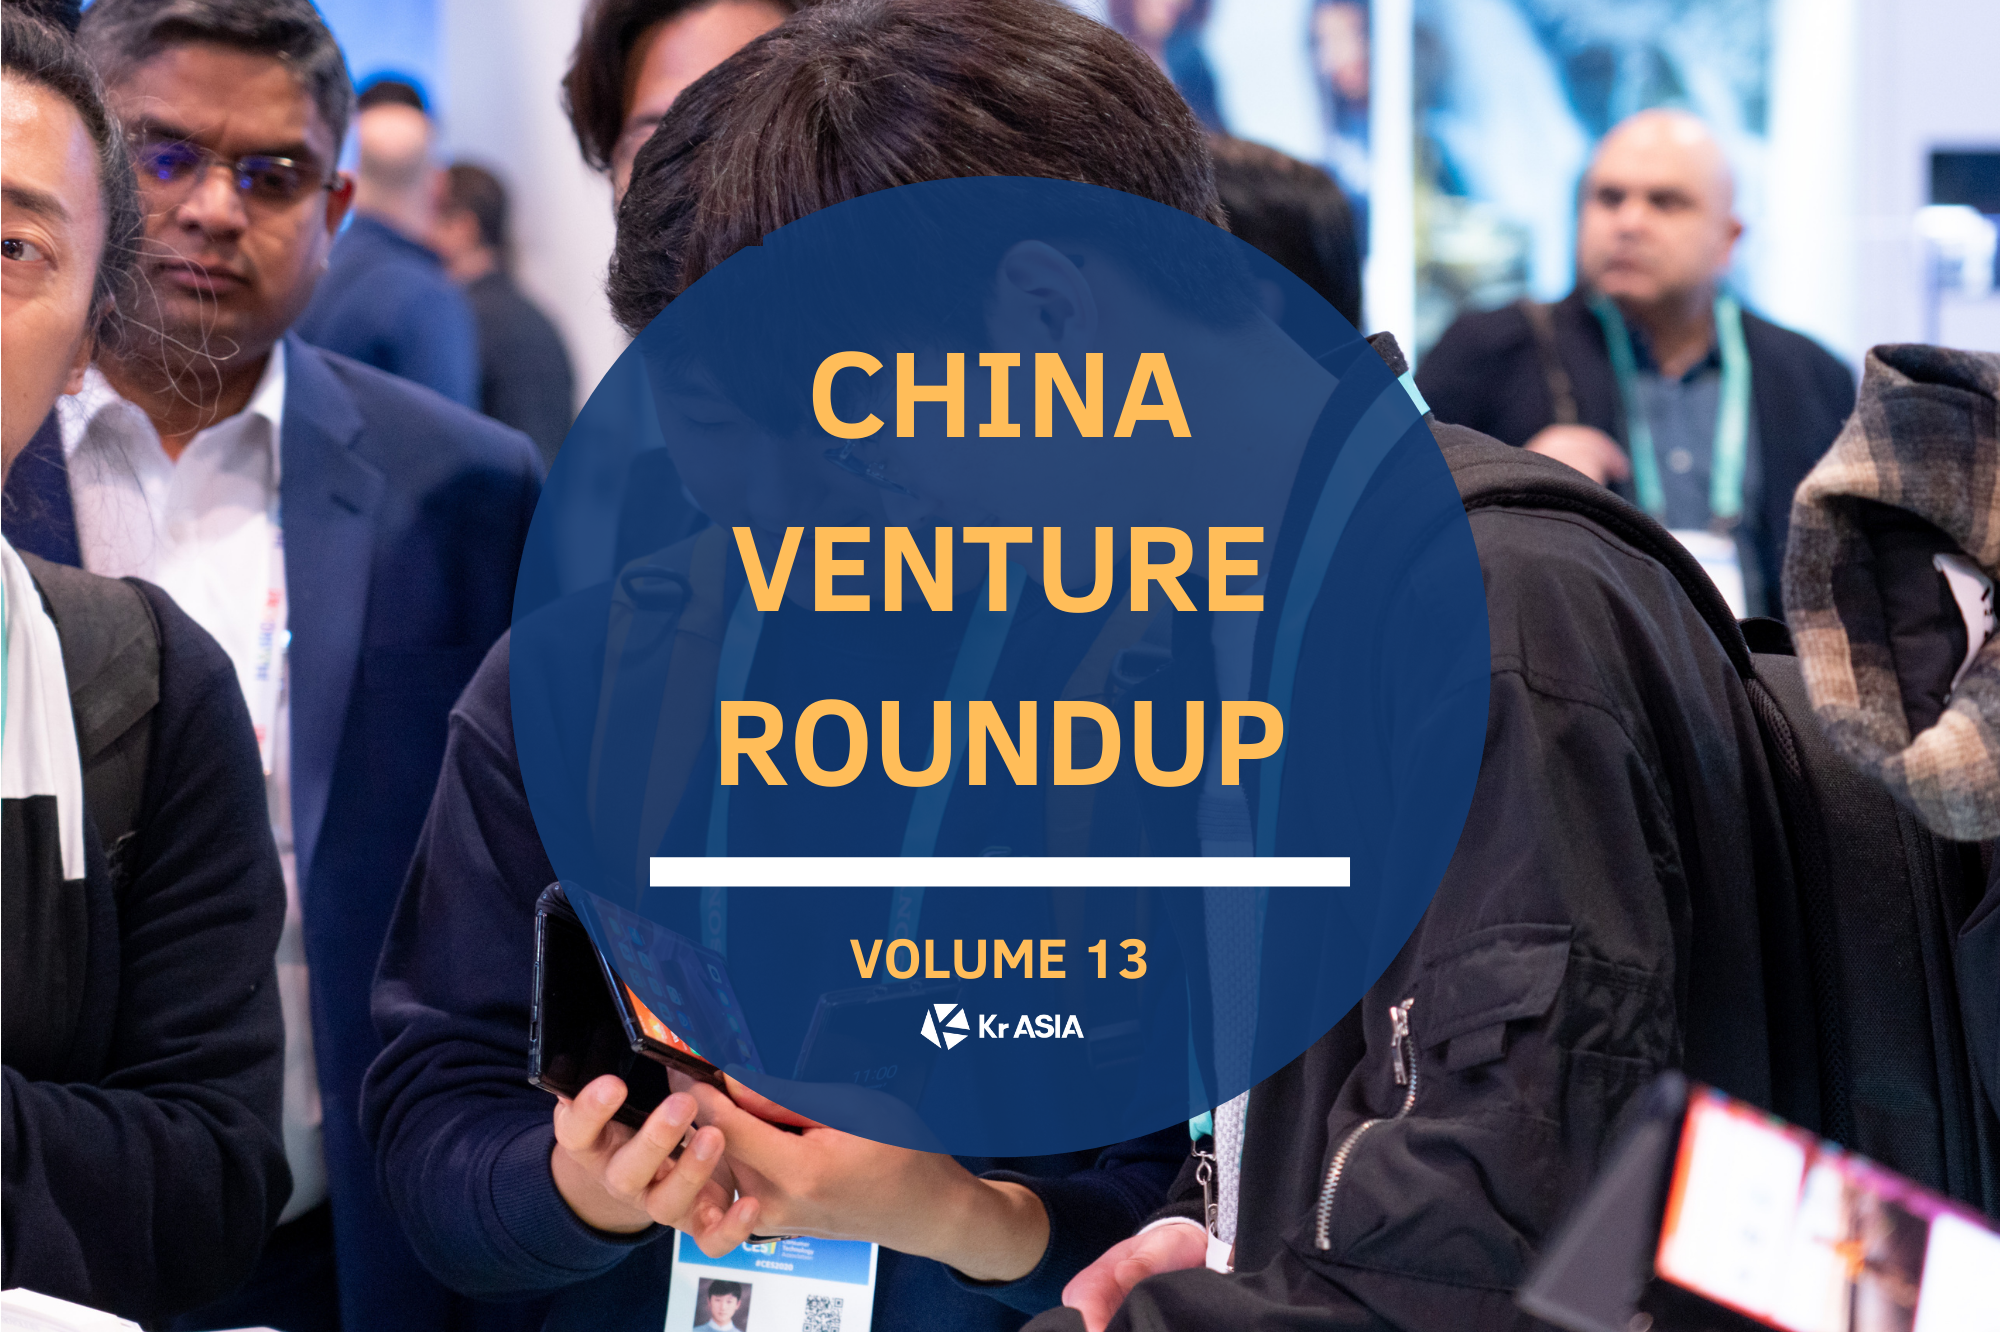 World’s largest logistics locker system operator closes Series B | China Venture Roundup Volume 18